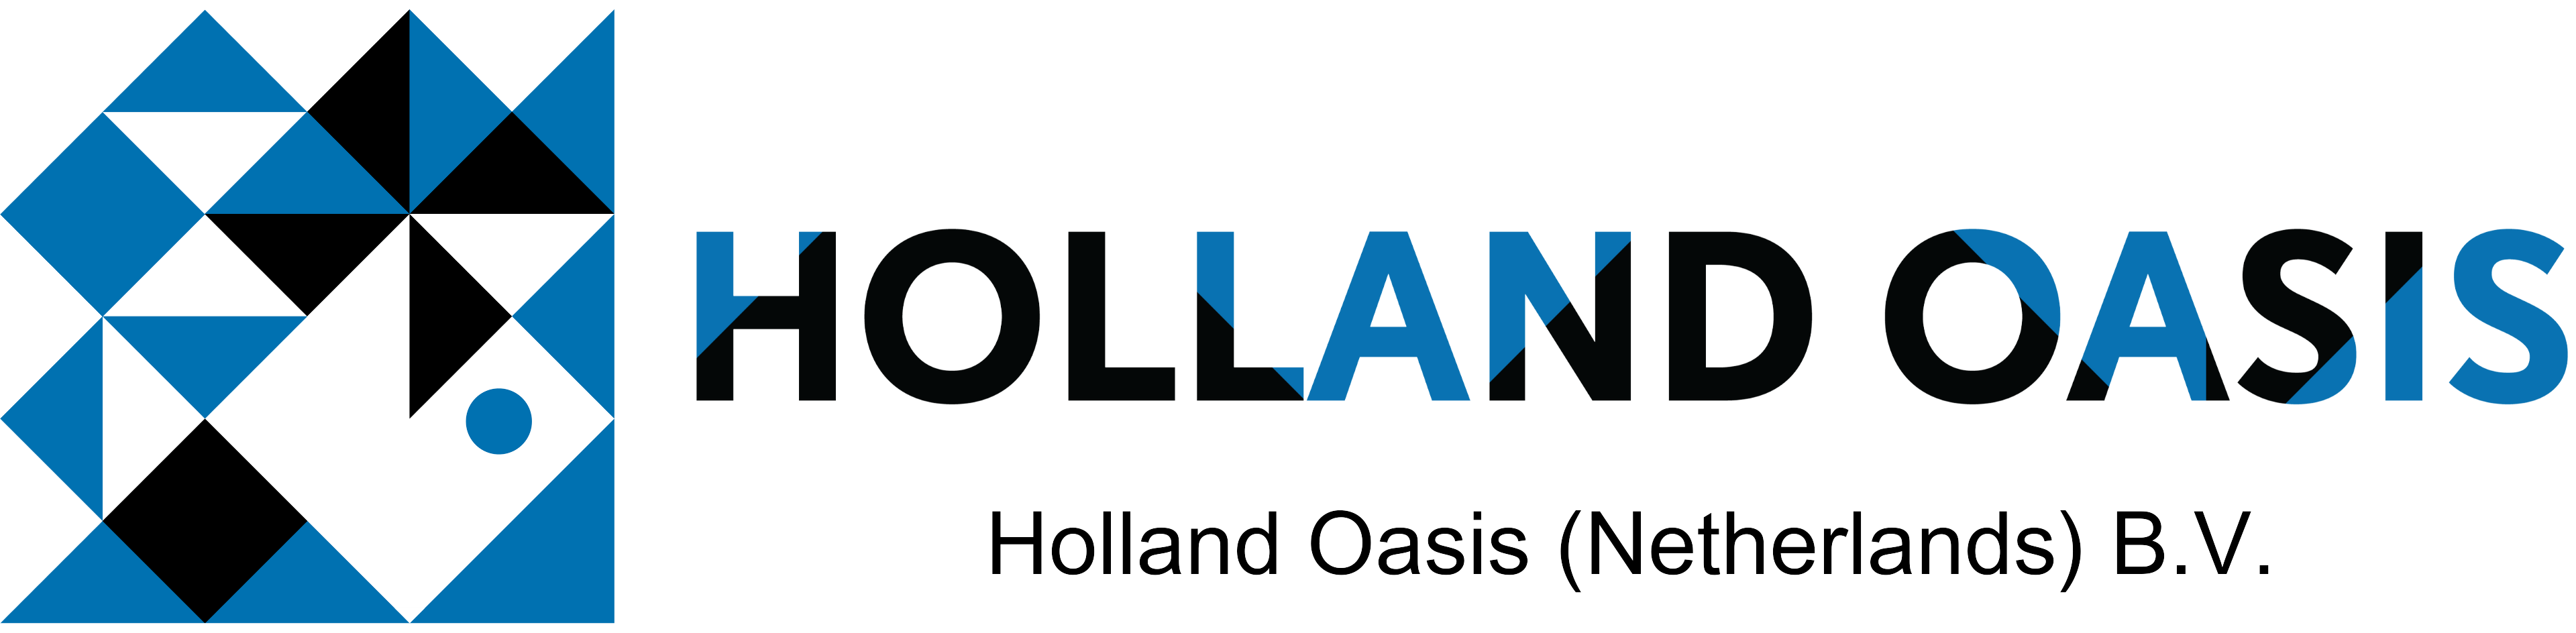 Holland Oasis logo